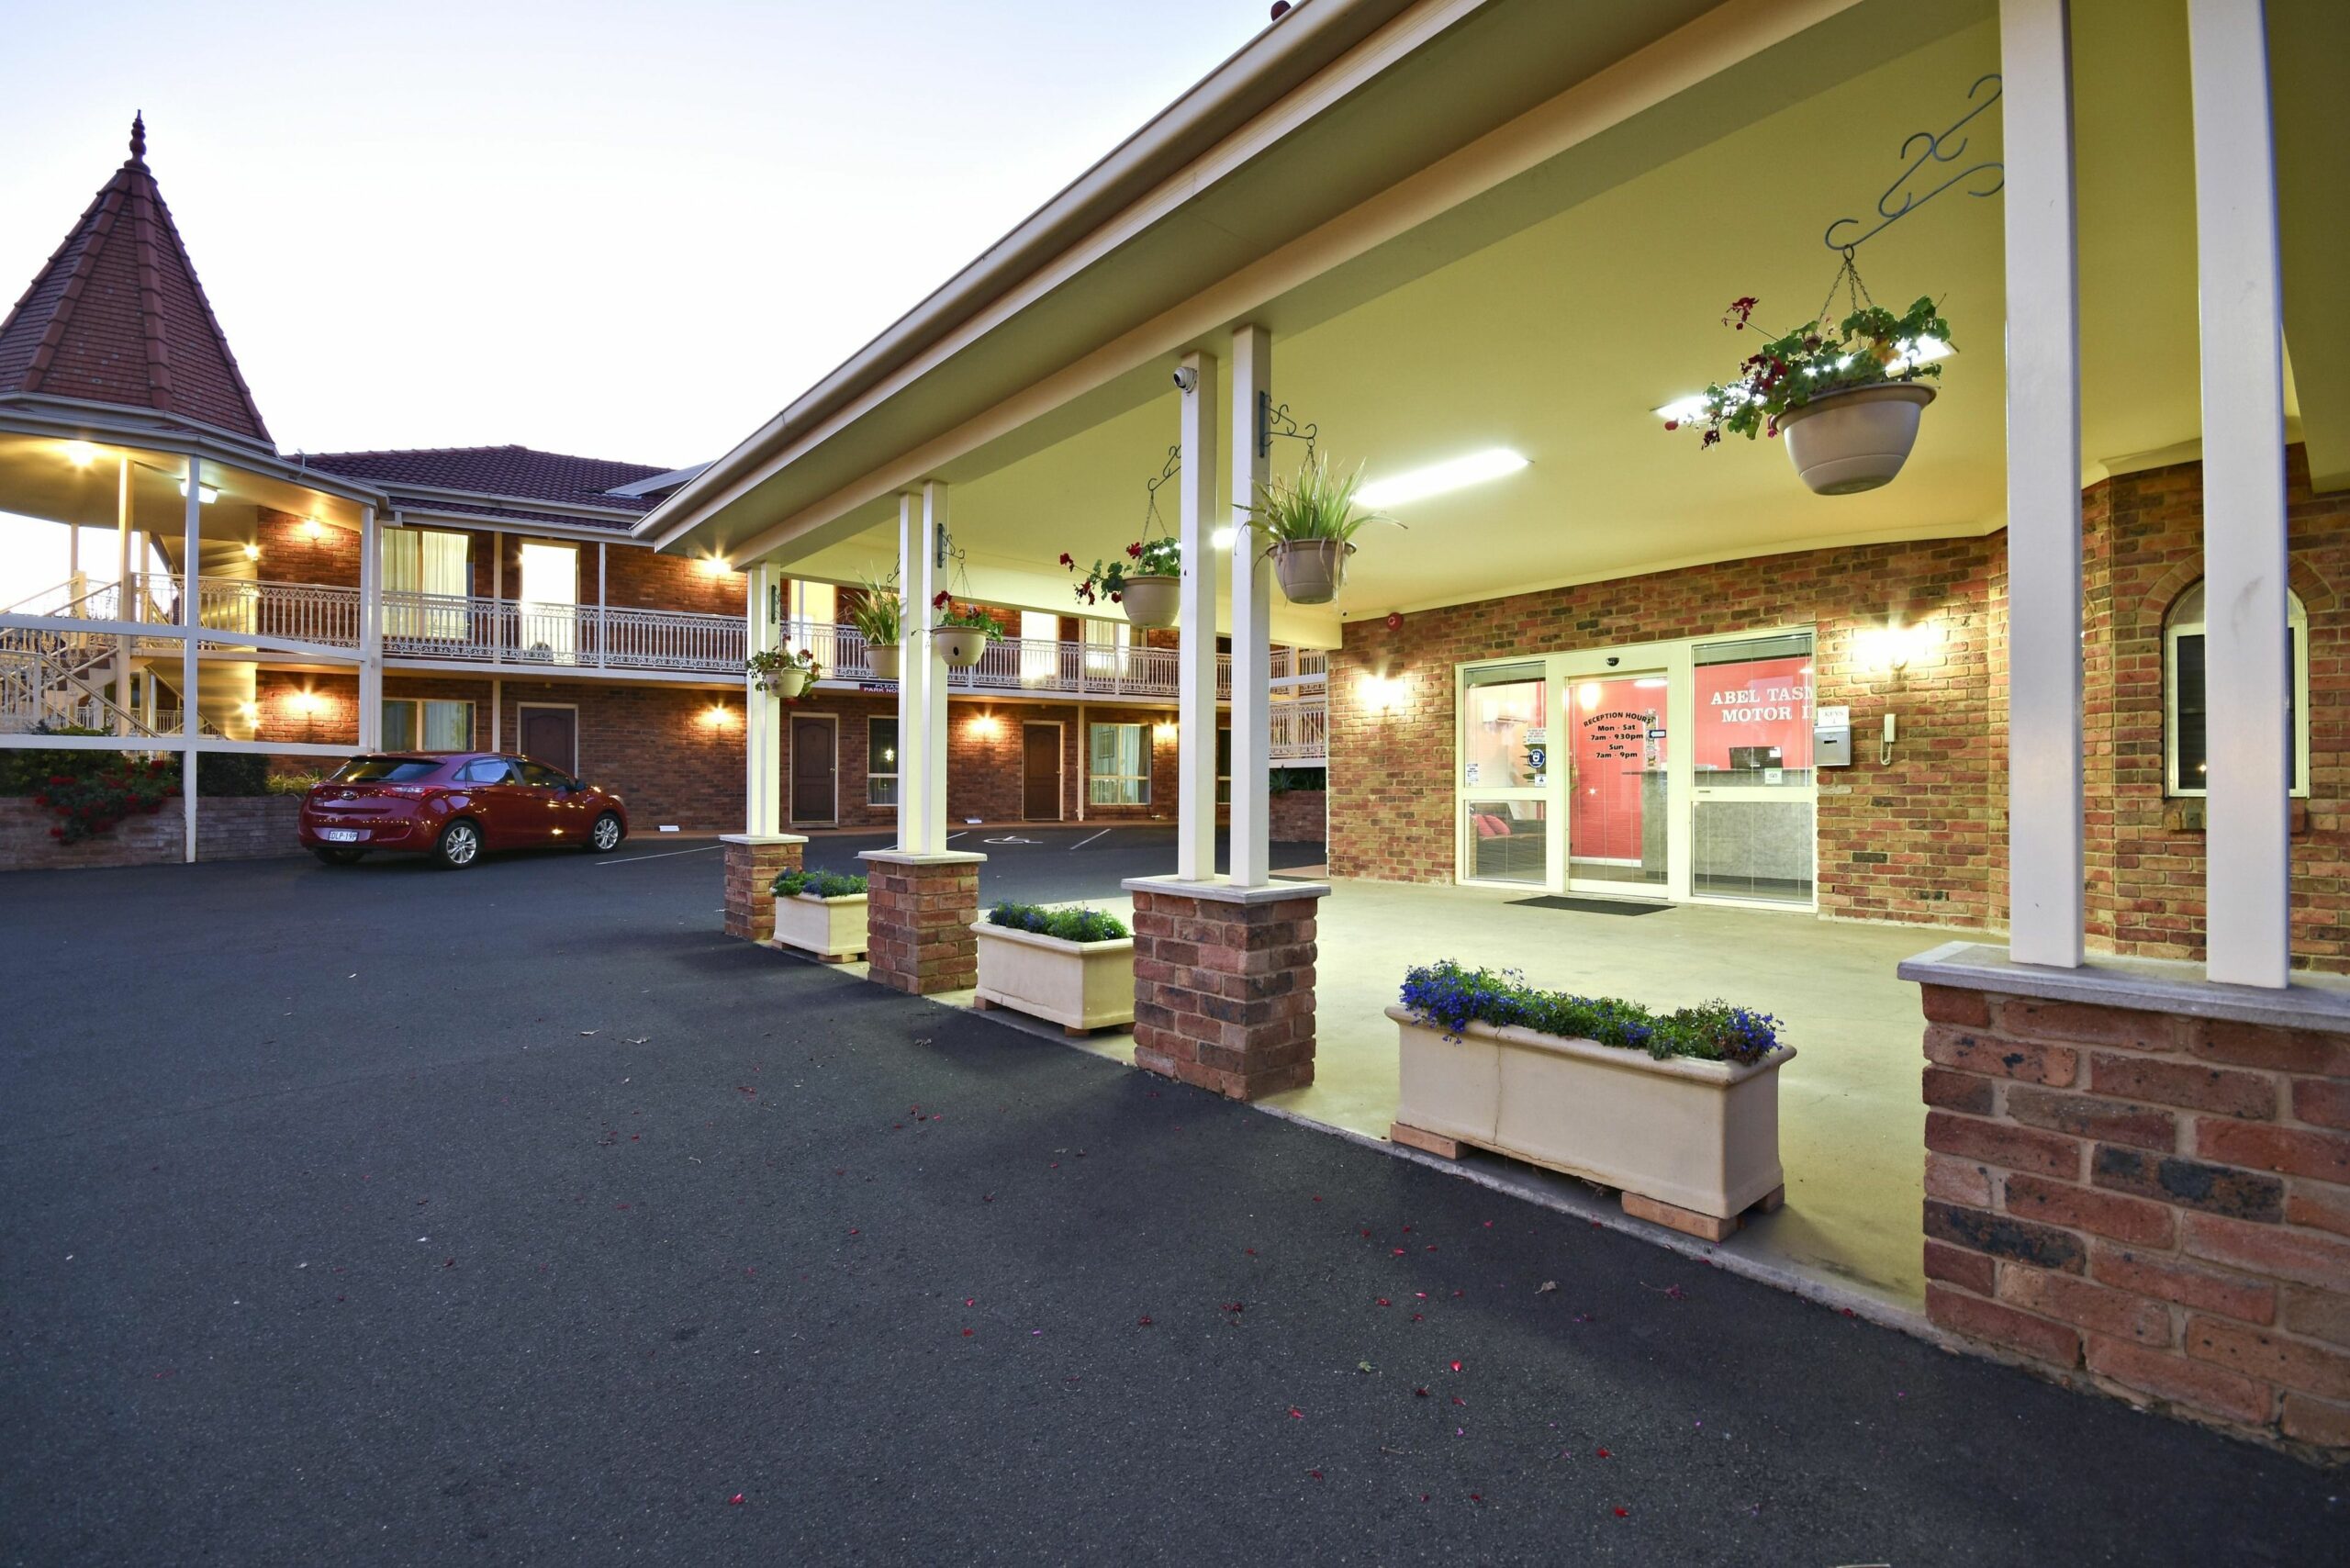 Abel Tasman Motor Inn